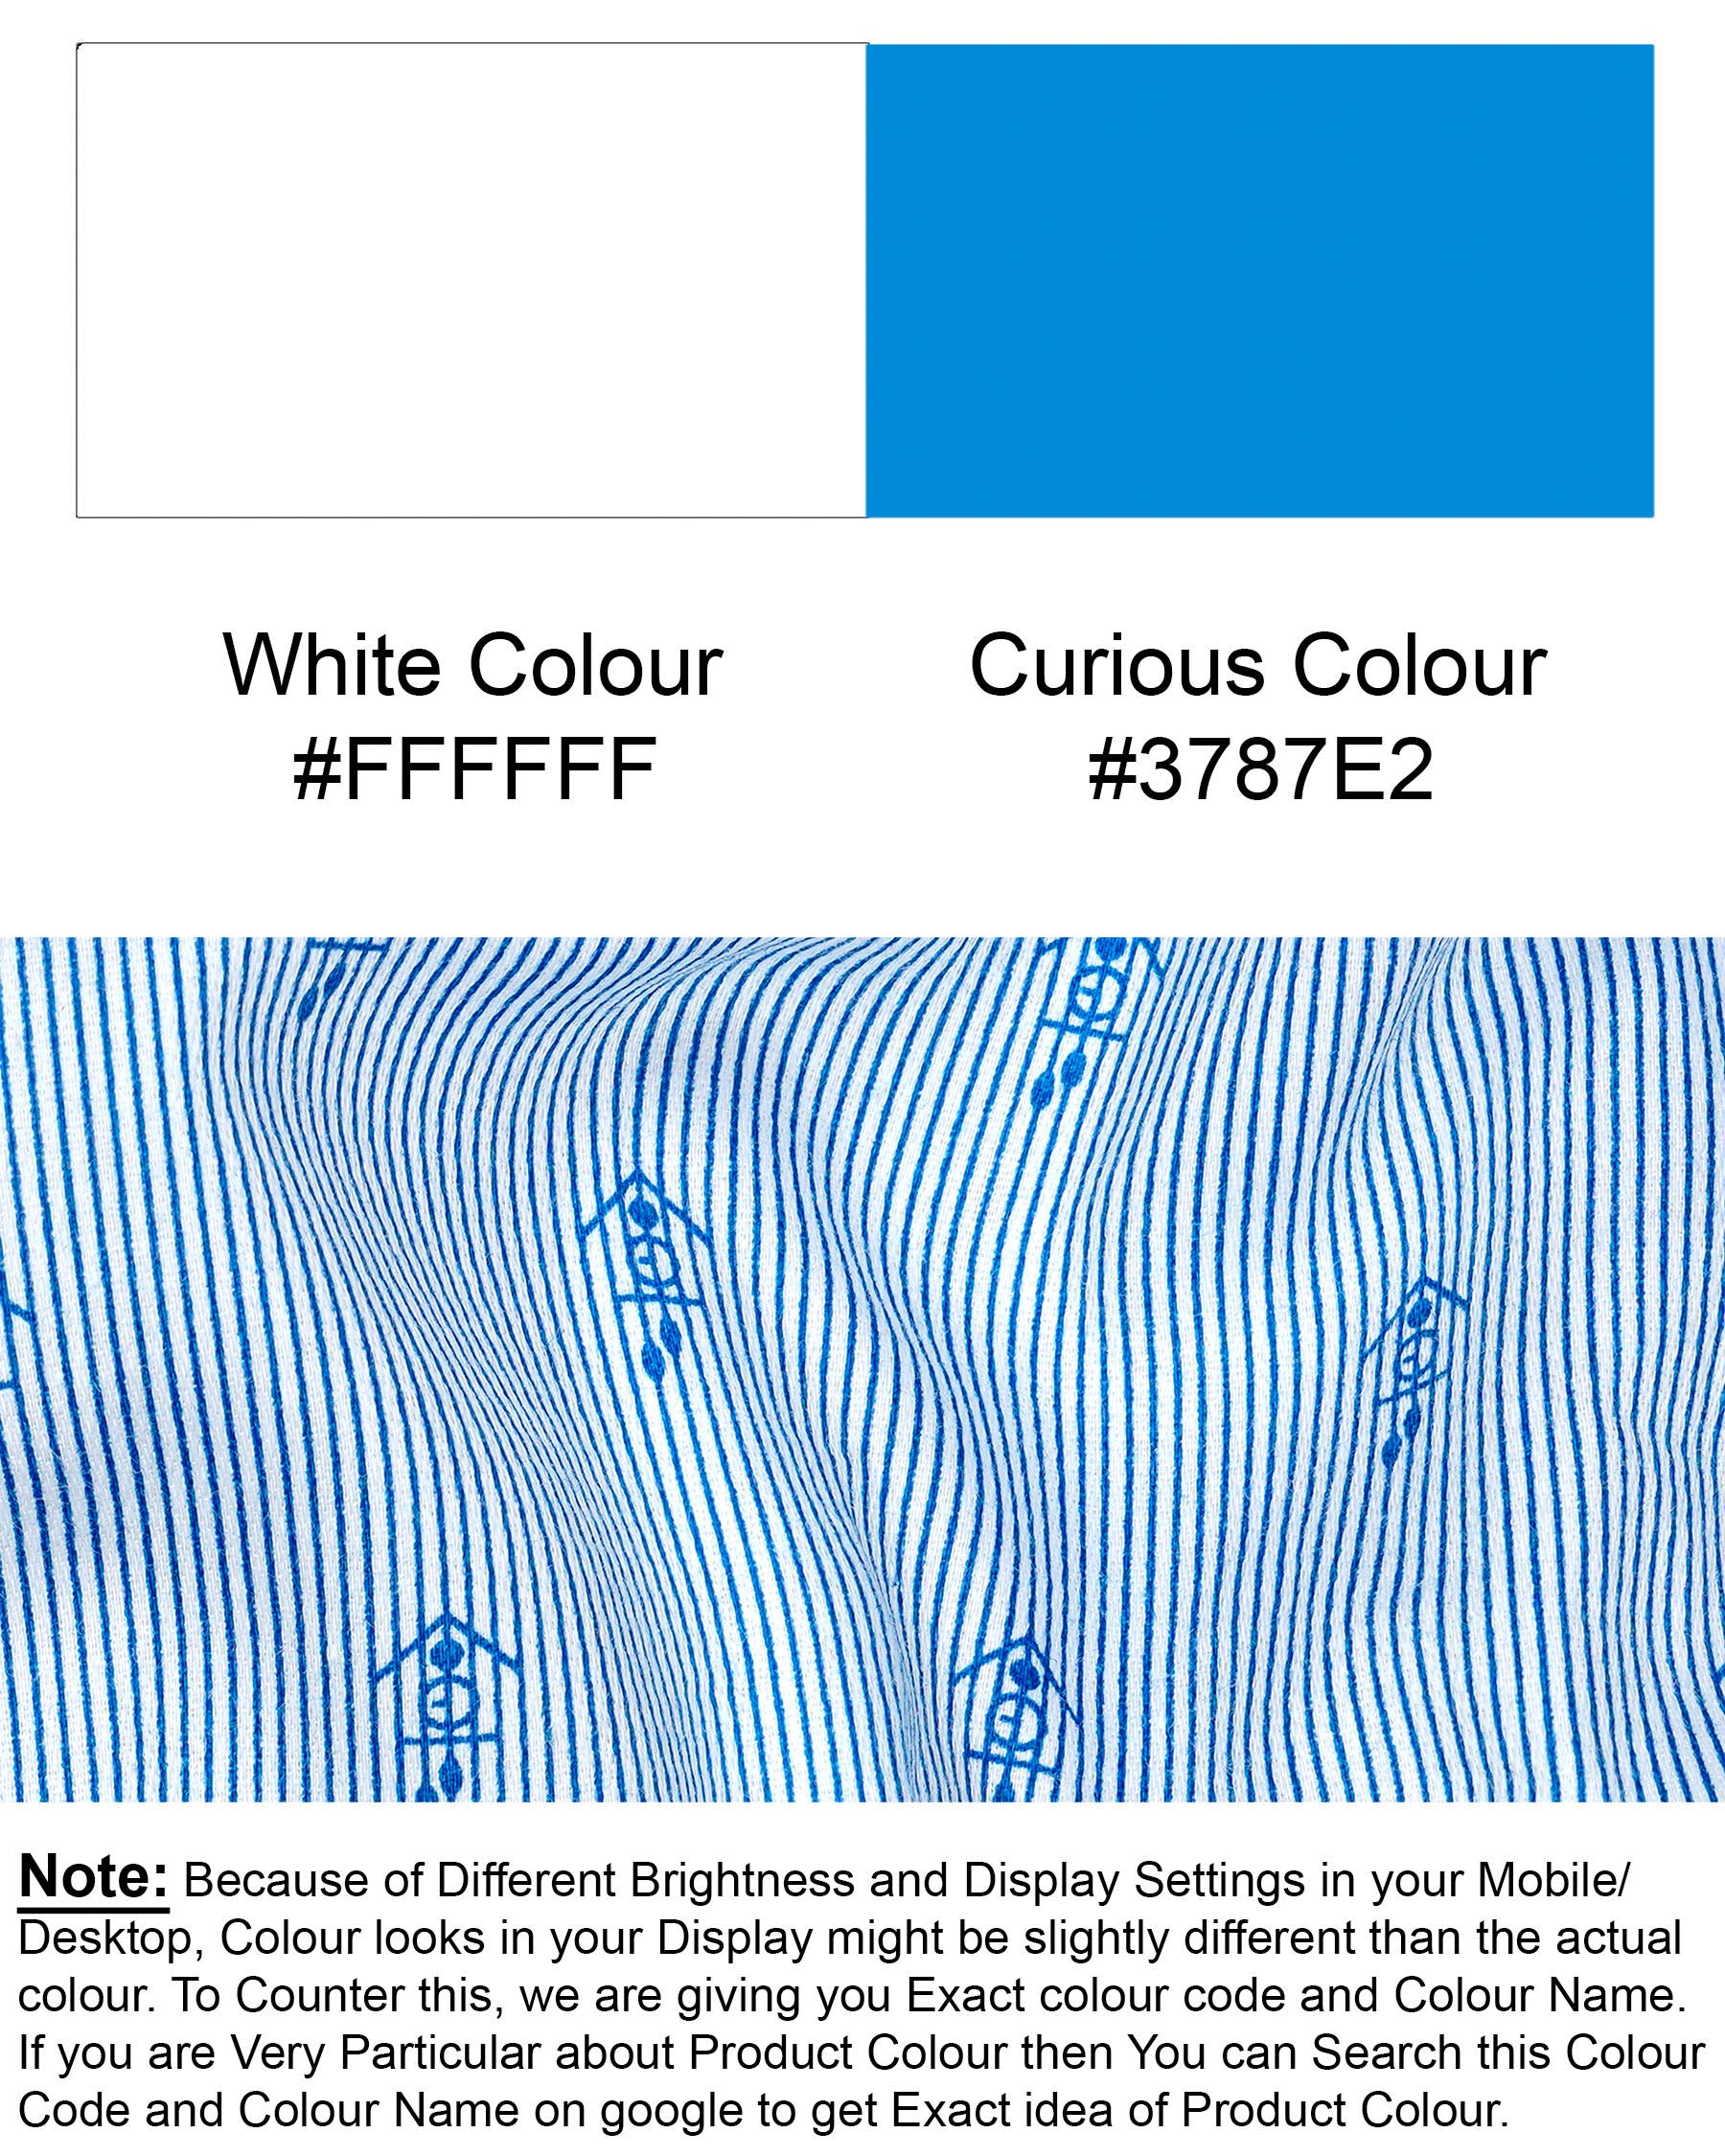 Curious Blue Striped and Anchor Printed Super Soft Premium Cotton Shirt 7622-BLE-38, 7622-BLE-H-38, 7622-BLE-39,7622-BLE-H-39, 7622-BLE-40, 7622-BLE-H-40, 7622-BLE-42, 7622-BLE-H-42, 7622-BLE-44, 7622-BLE-H-44, 7622-BLE-46, 7622-BLE-H-46, 7622-BLE-48, 7622-BLE-H-48, 7622-BLE-50, 7622-BLE-H-50, 7622-BLE-52, 7622-BLE-H-52